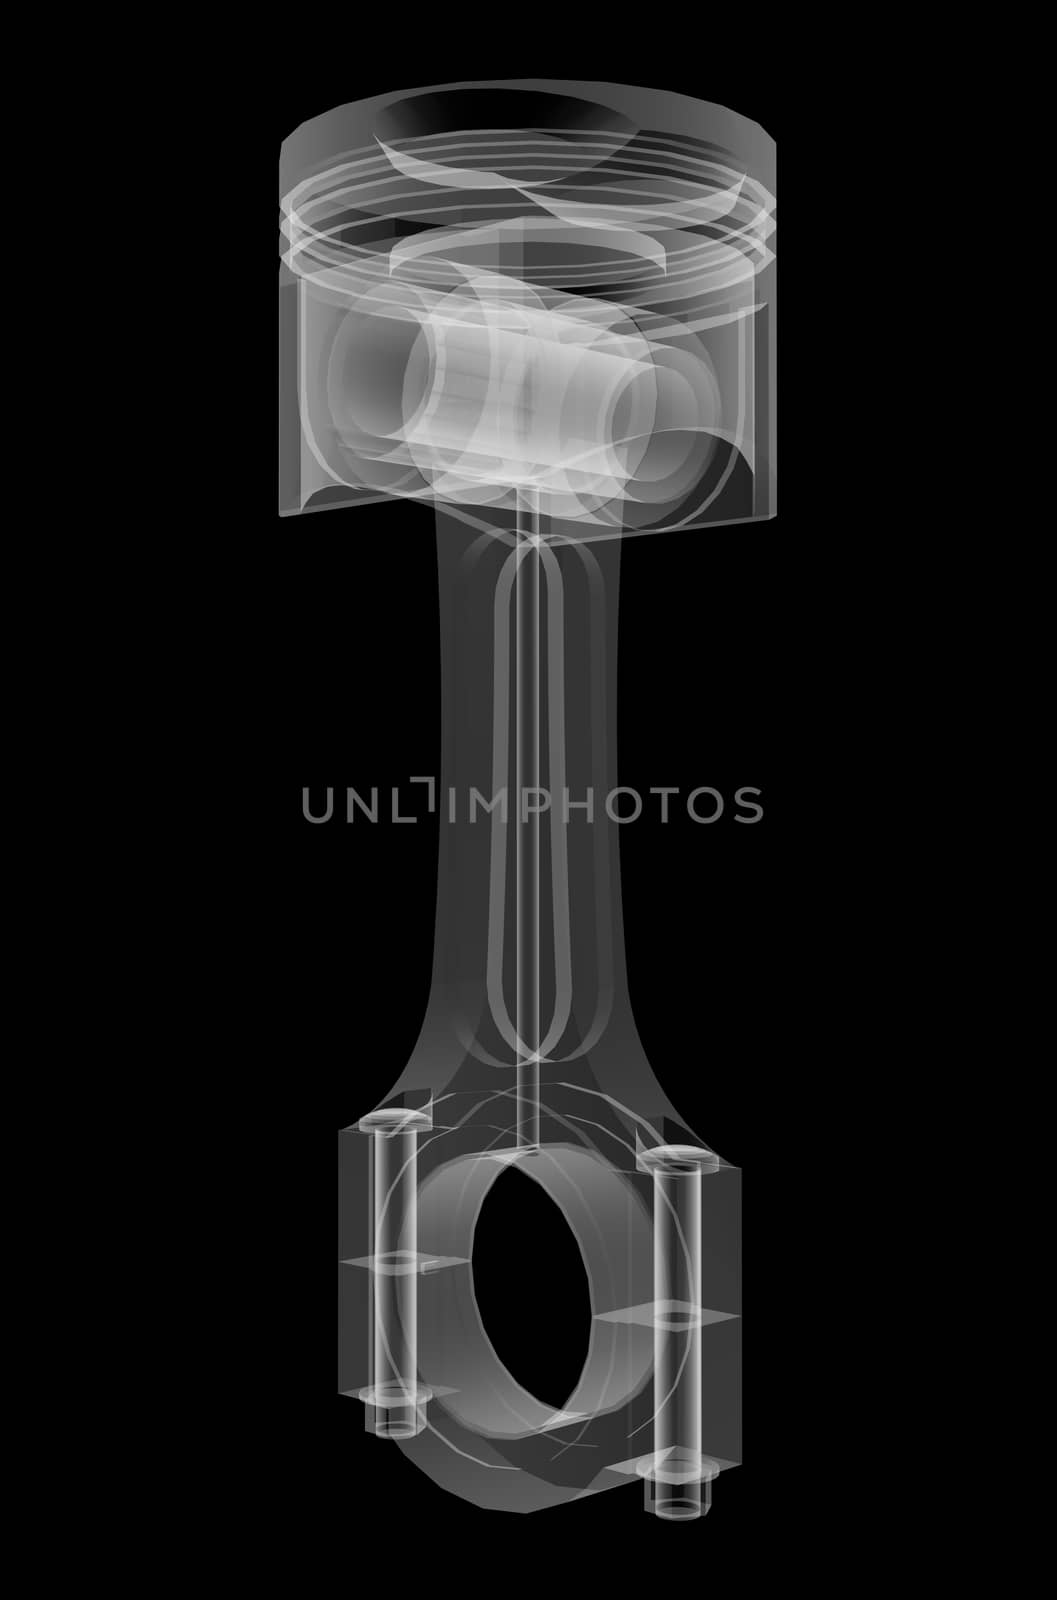 Piston X-Ray style by cherezoff